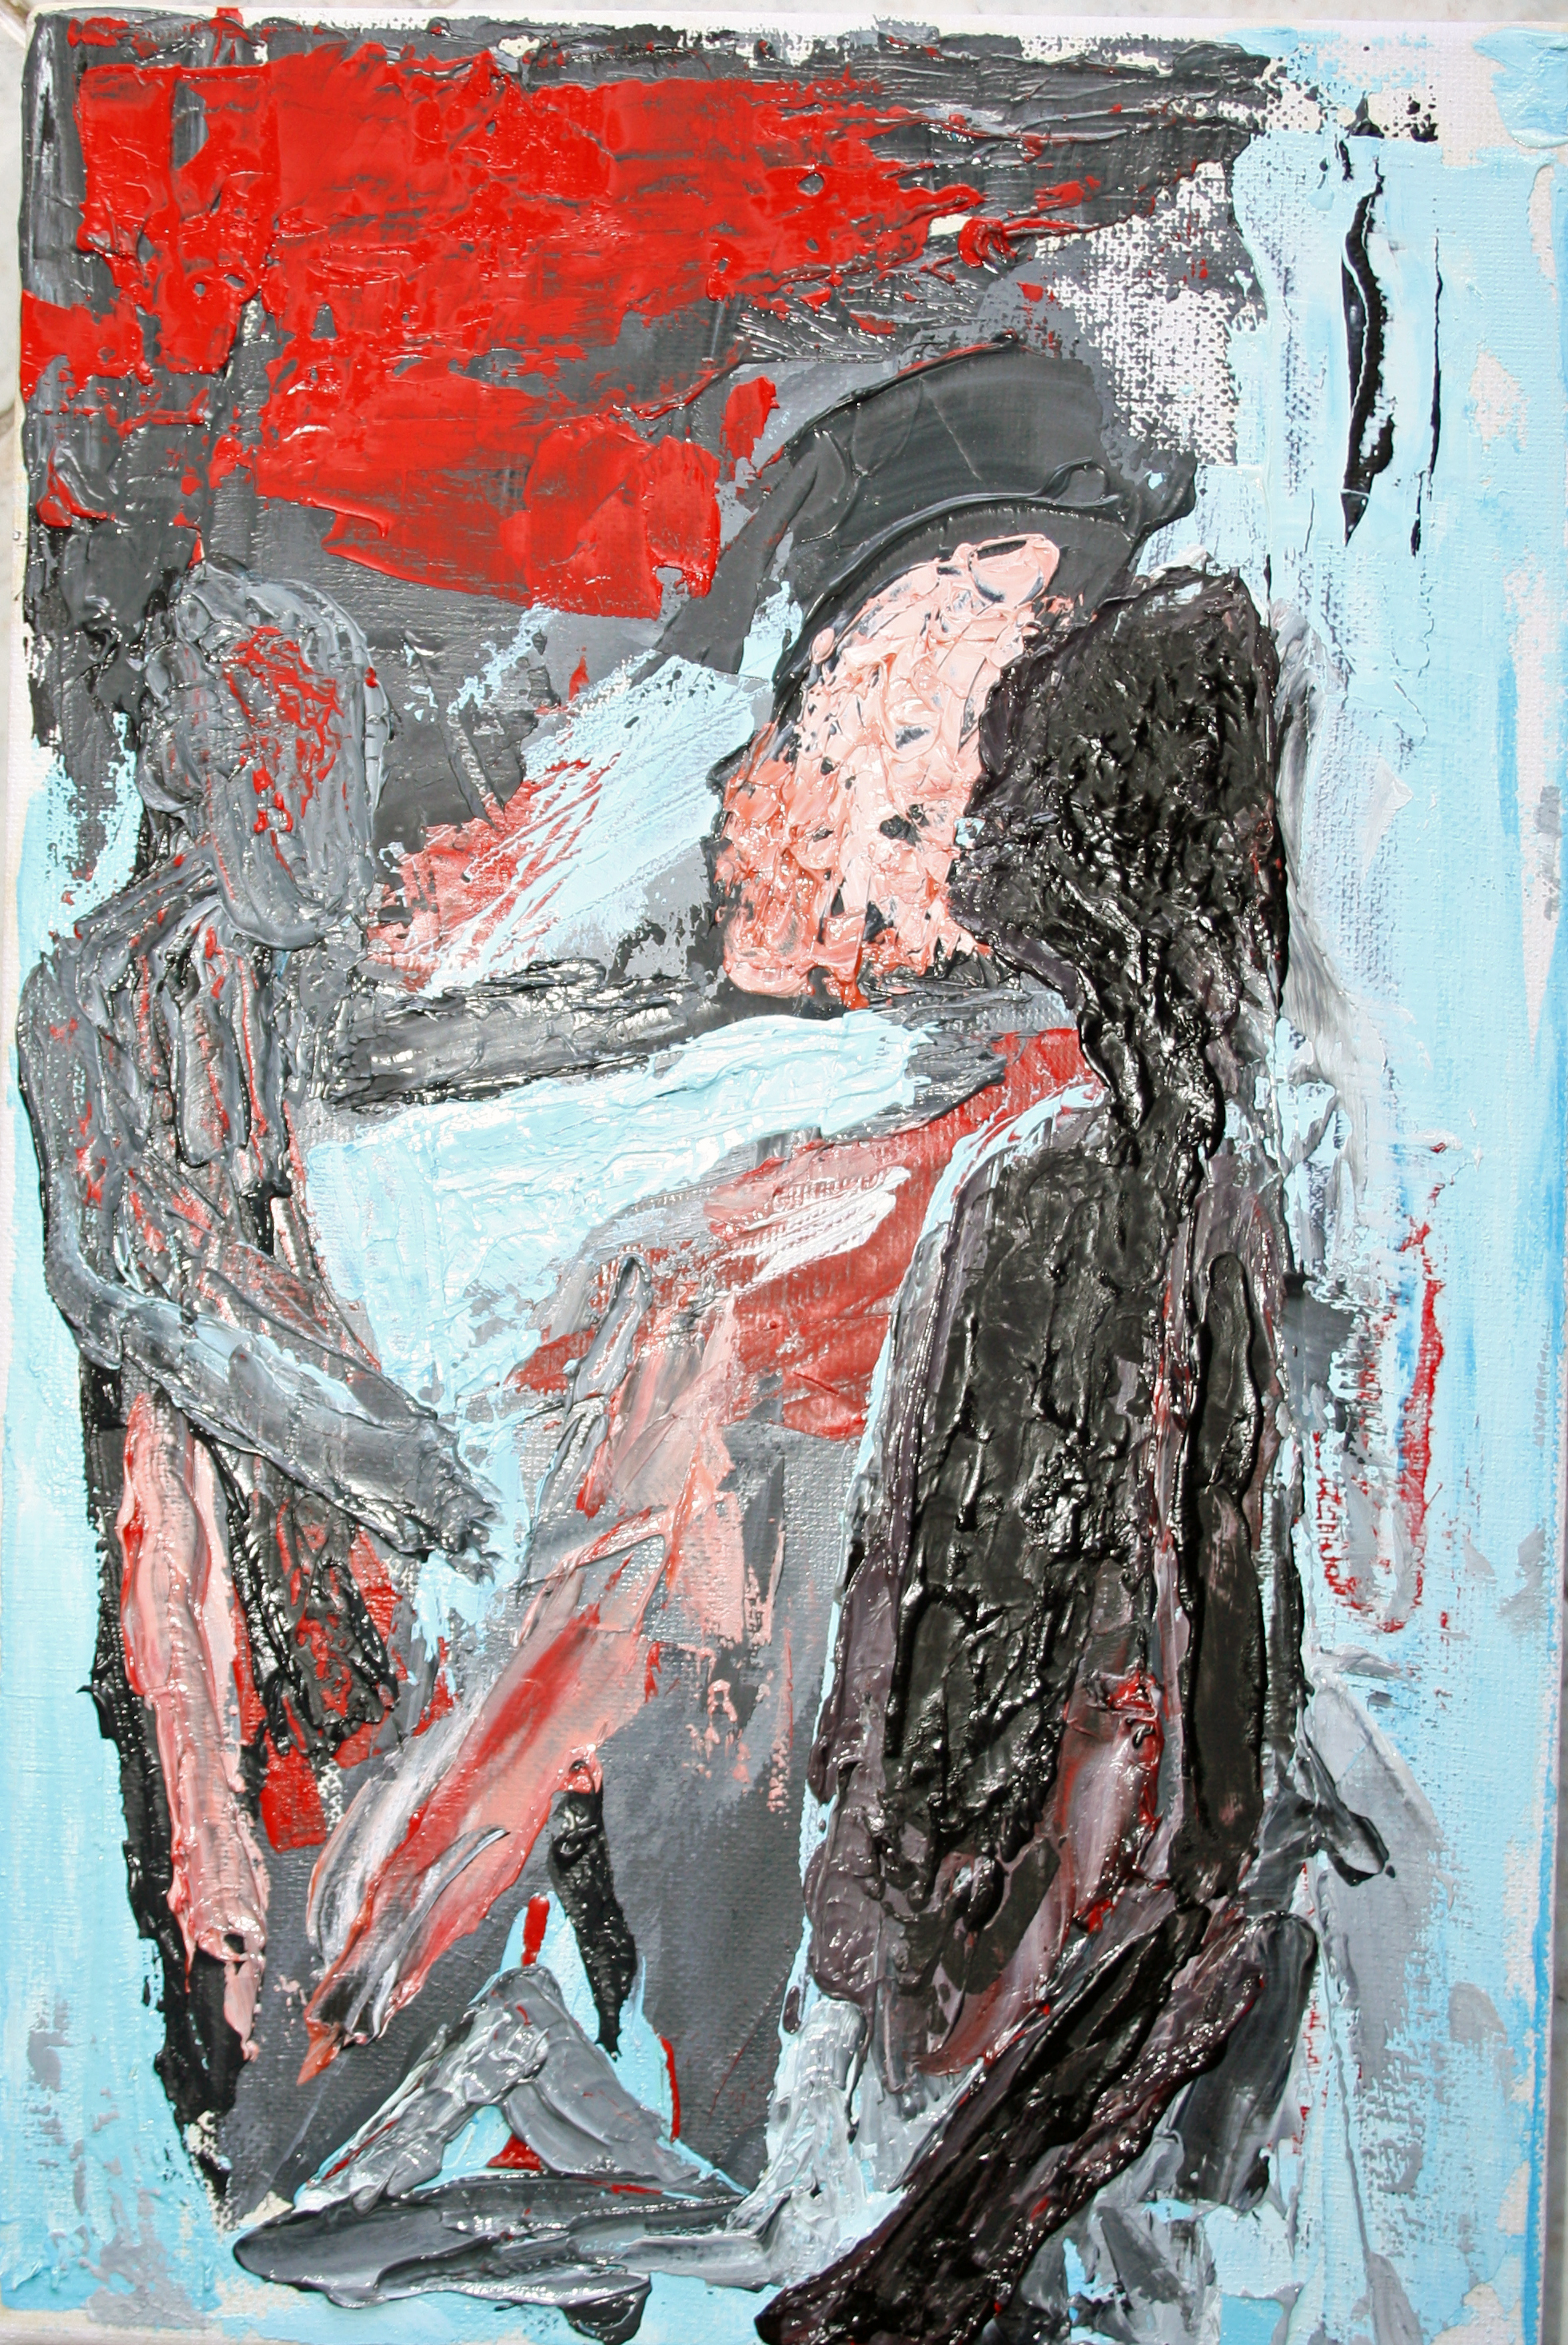 Ombre (shadows), 2016 dipinto olio su tela (painting oil on canvas), cm 20x30, Pasquale Mastrogiacomo, Acerno (SA).